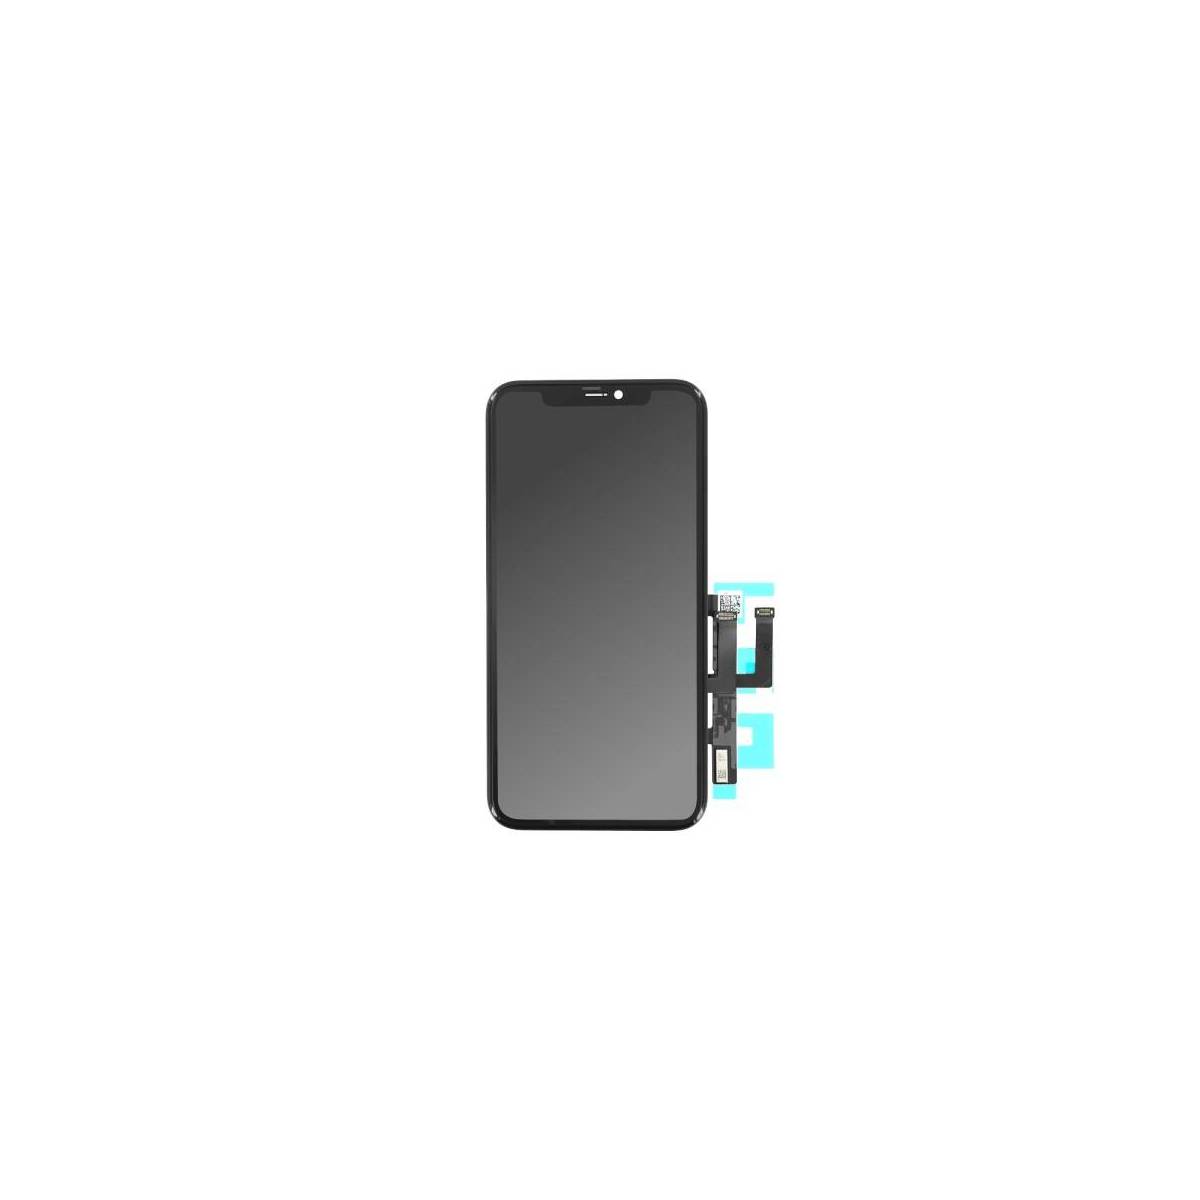 Ecran iPhone 11 - Compatible soft OLED